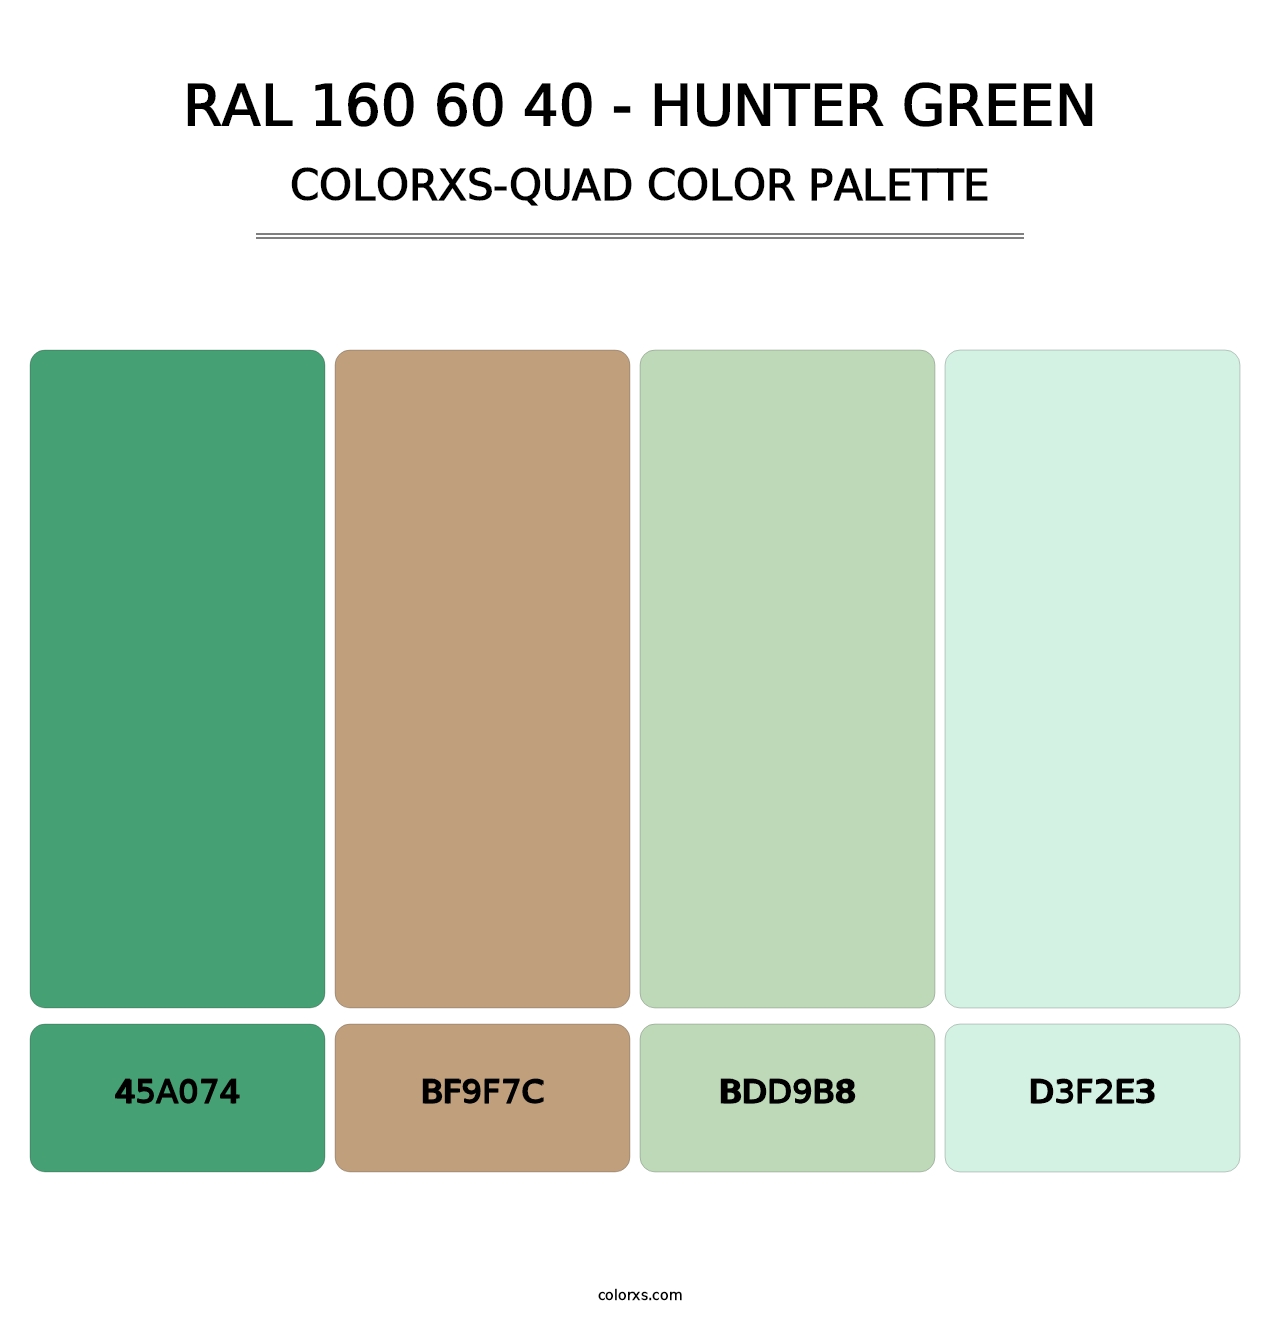 RAL 160 60 40 - Hunter Green - Colorxs Quad Palette